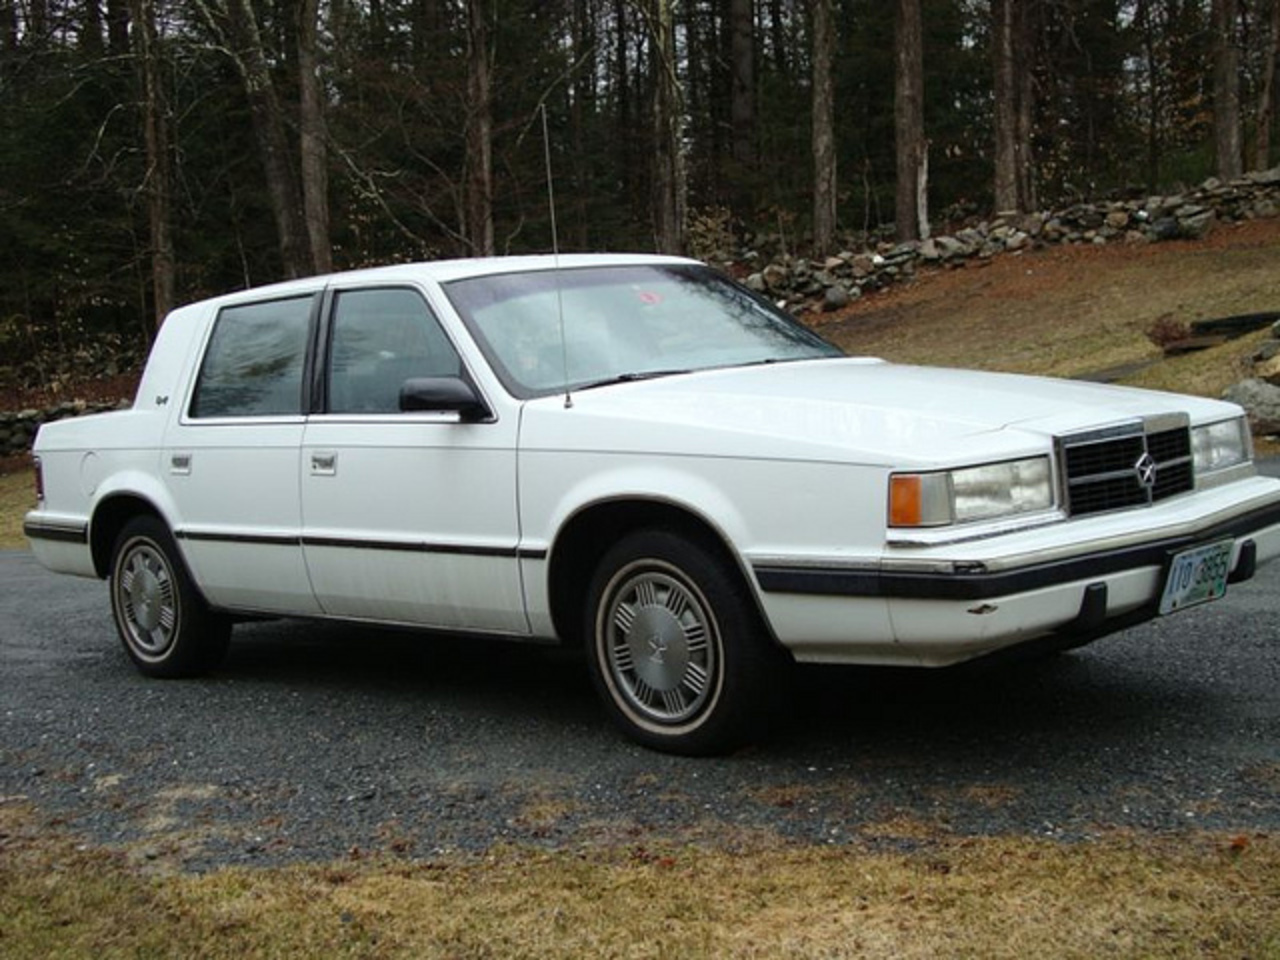 1990 Dodge Dynasty | Flickr - Photo Sharing!